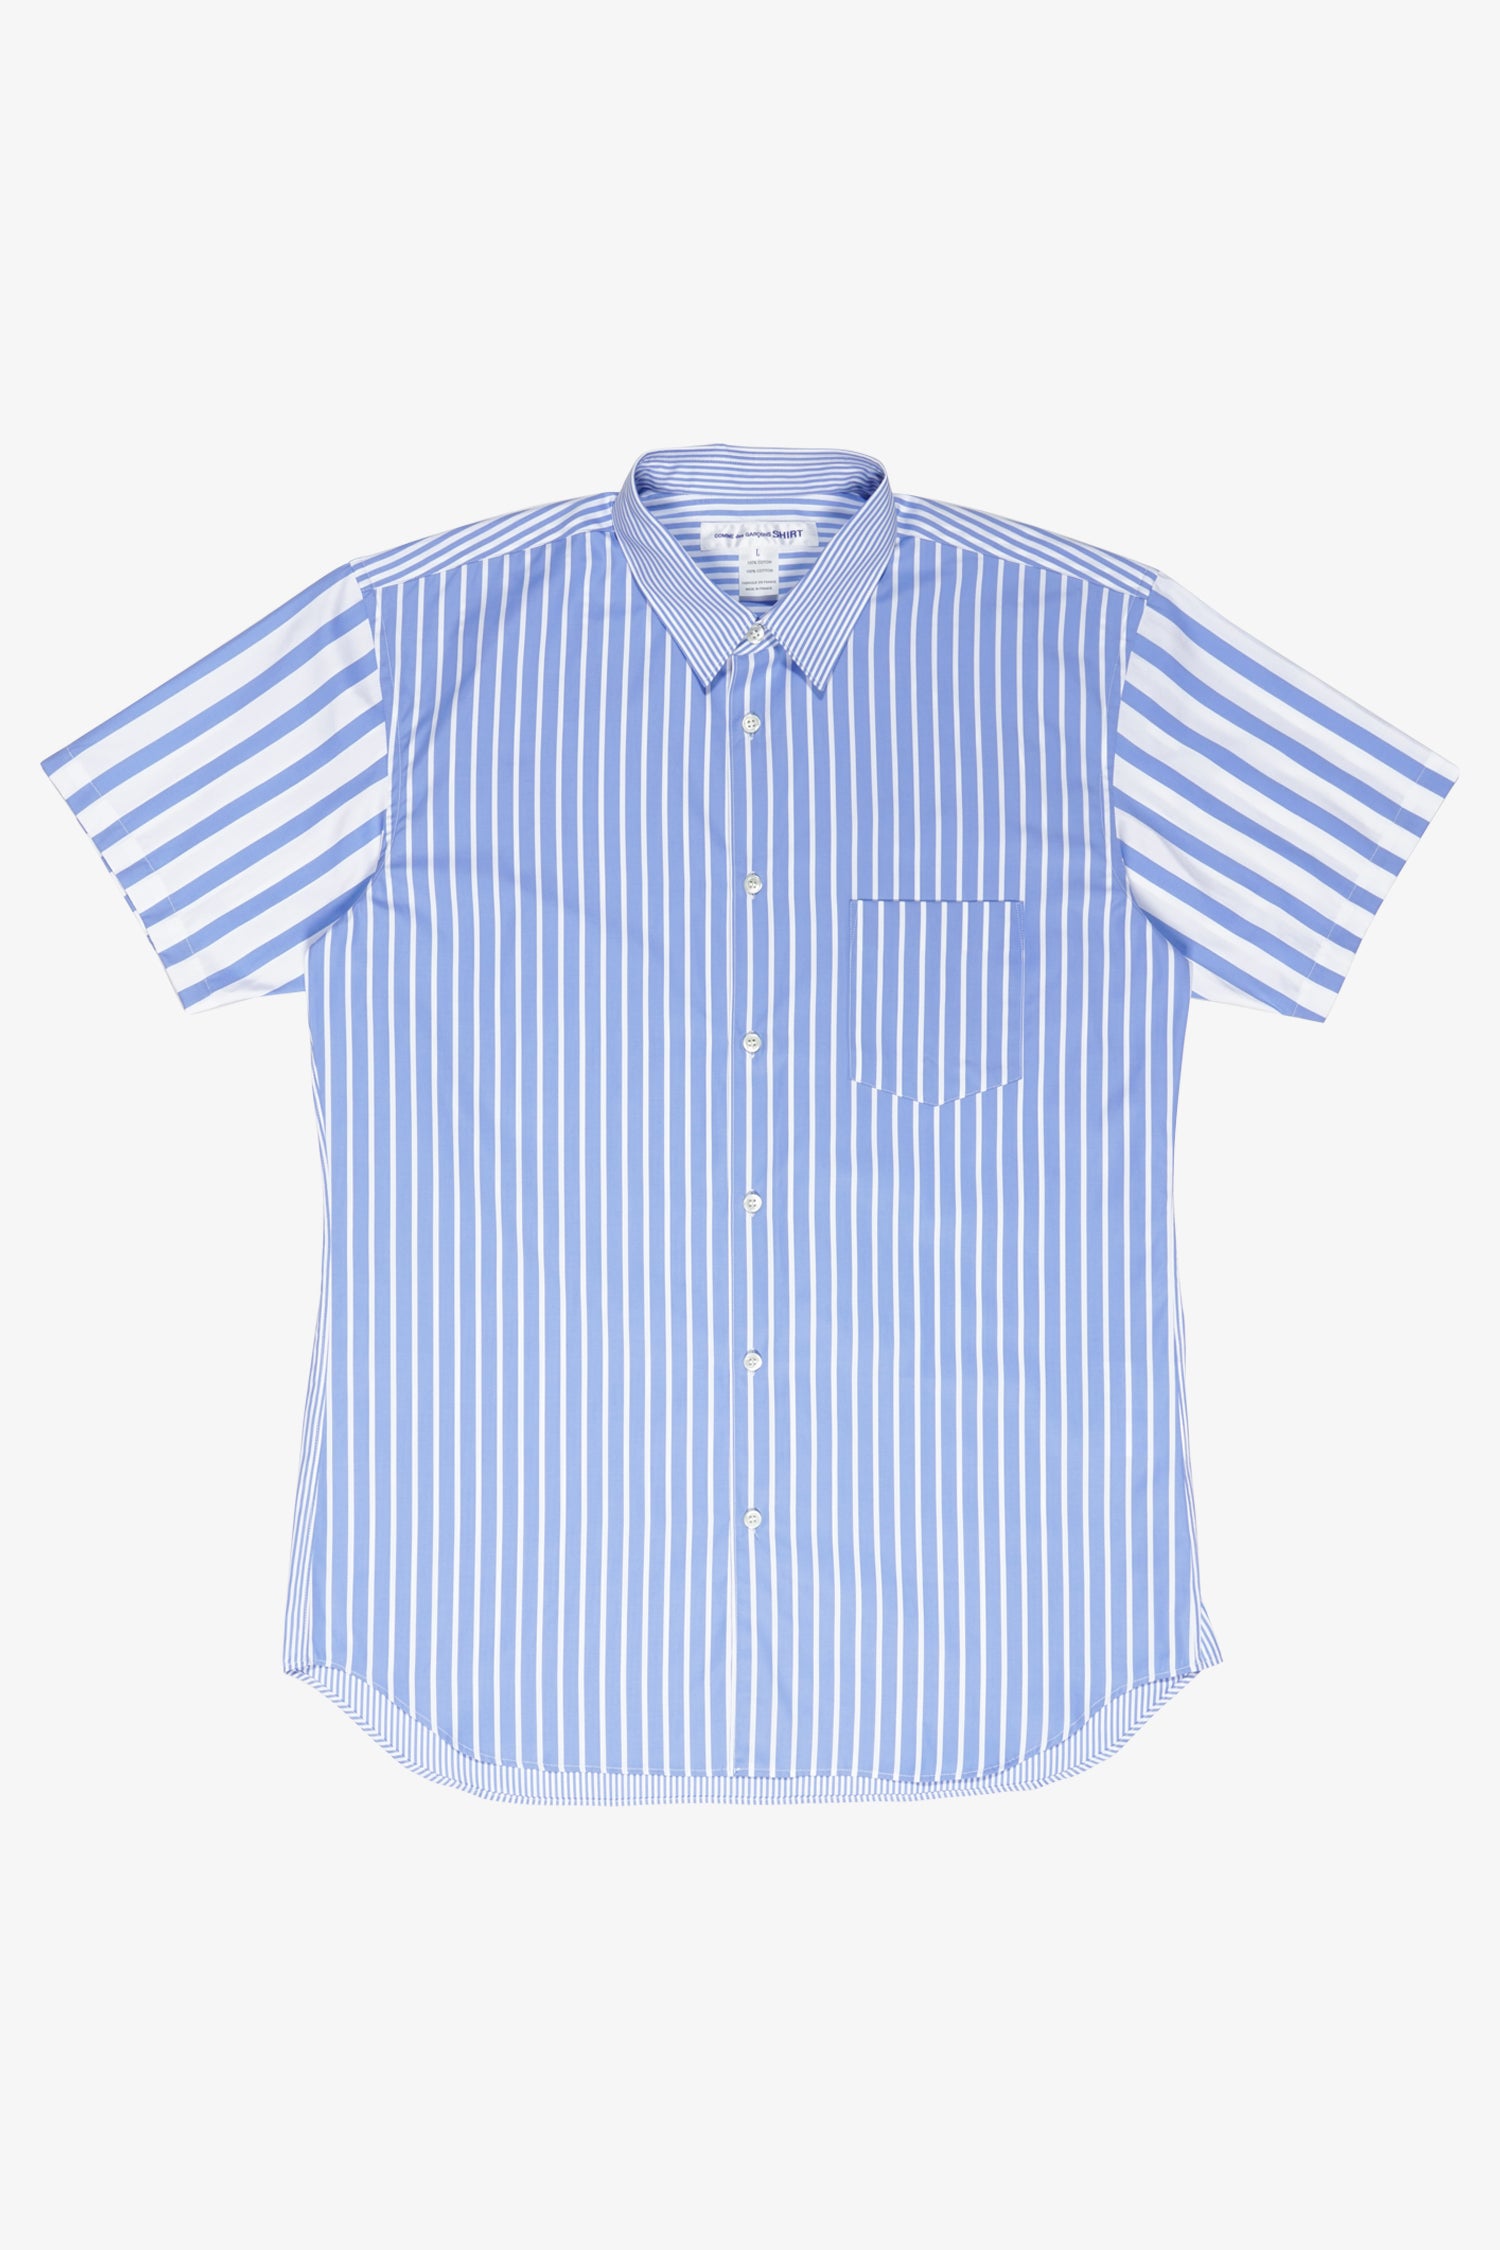 Selectshop FRAME - COMME DES GARÇONS SHIRT Short sleeves Colorblocking Striped Shirt Shirt Dubai